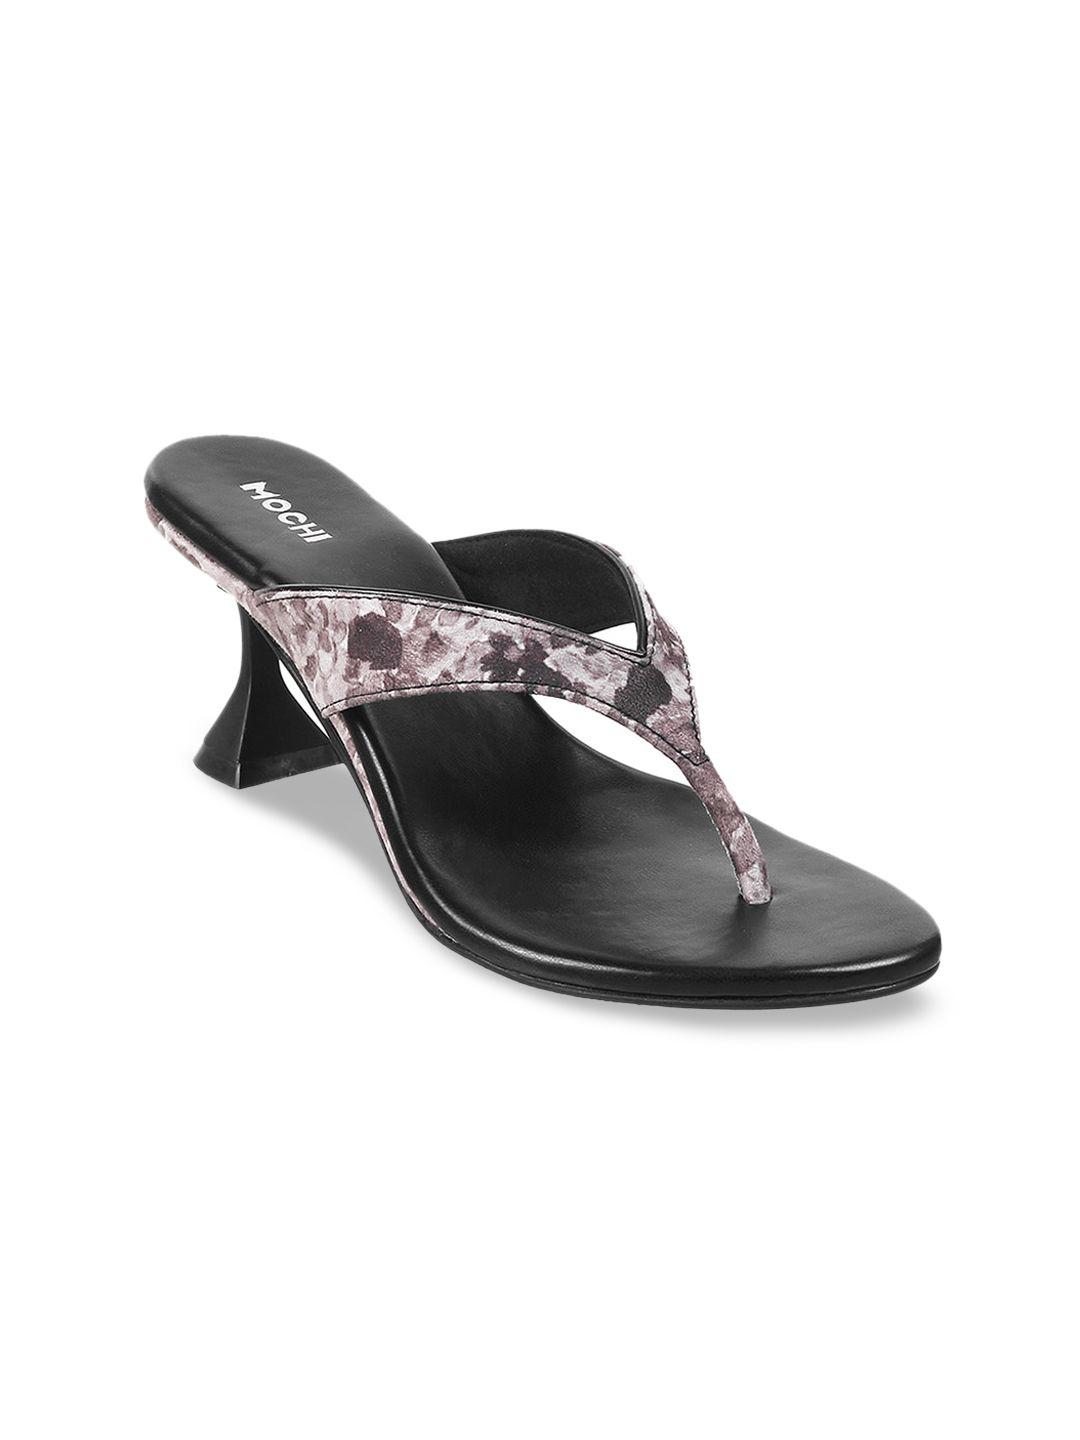 mochi-black-printed-kitten-sandals